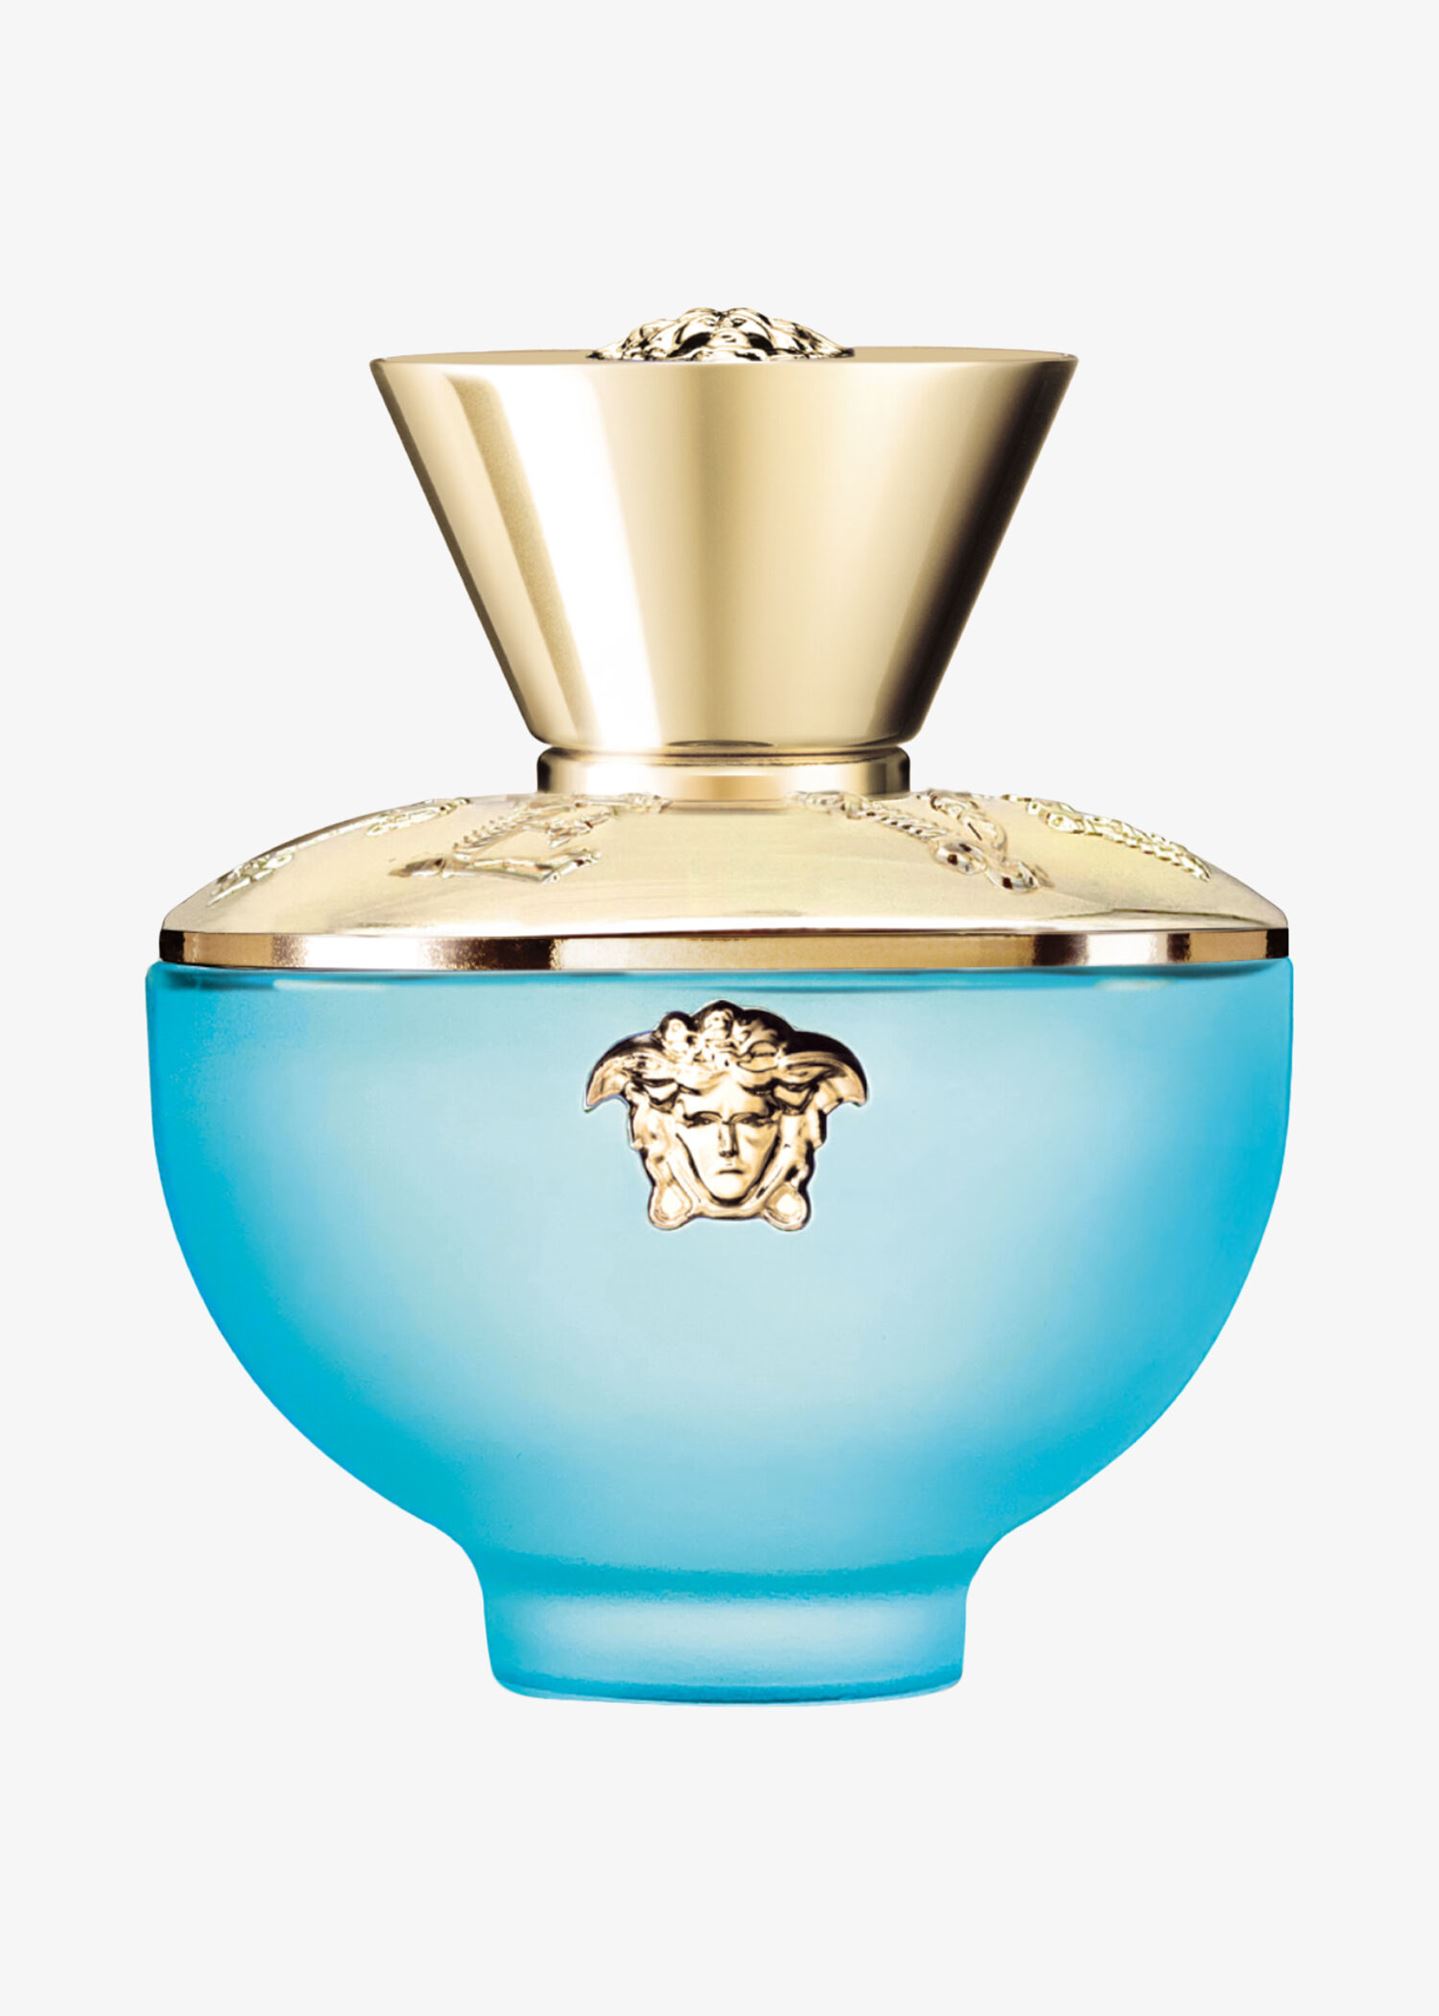 Parfum «Dylan Turquoise»